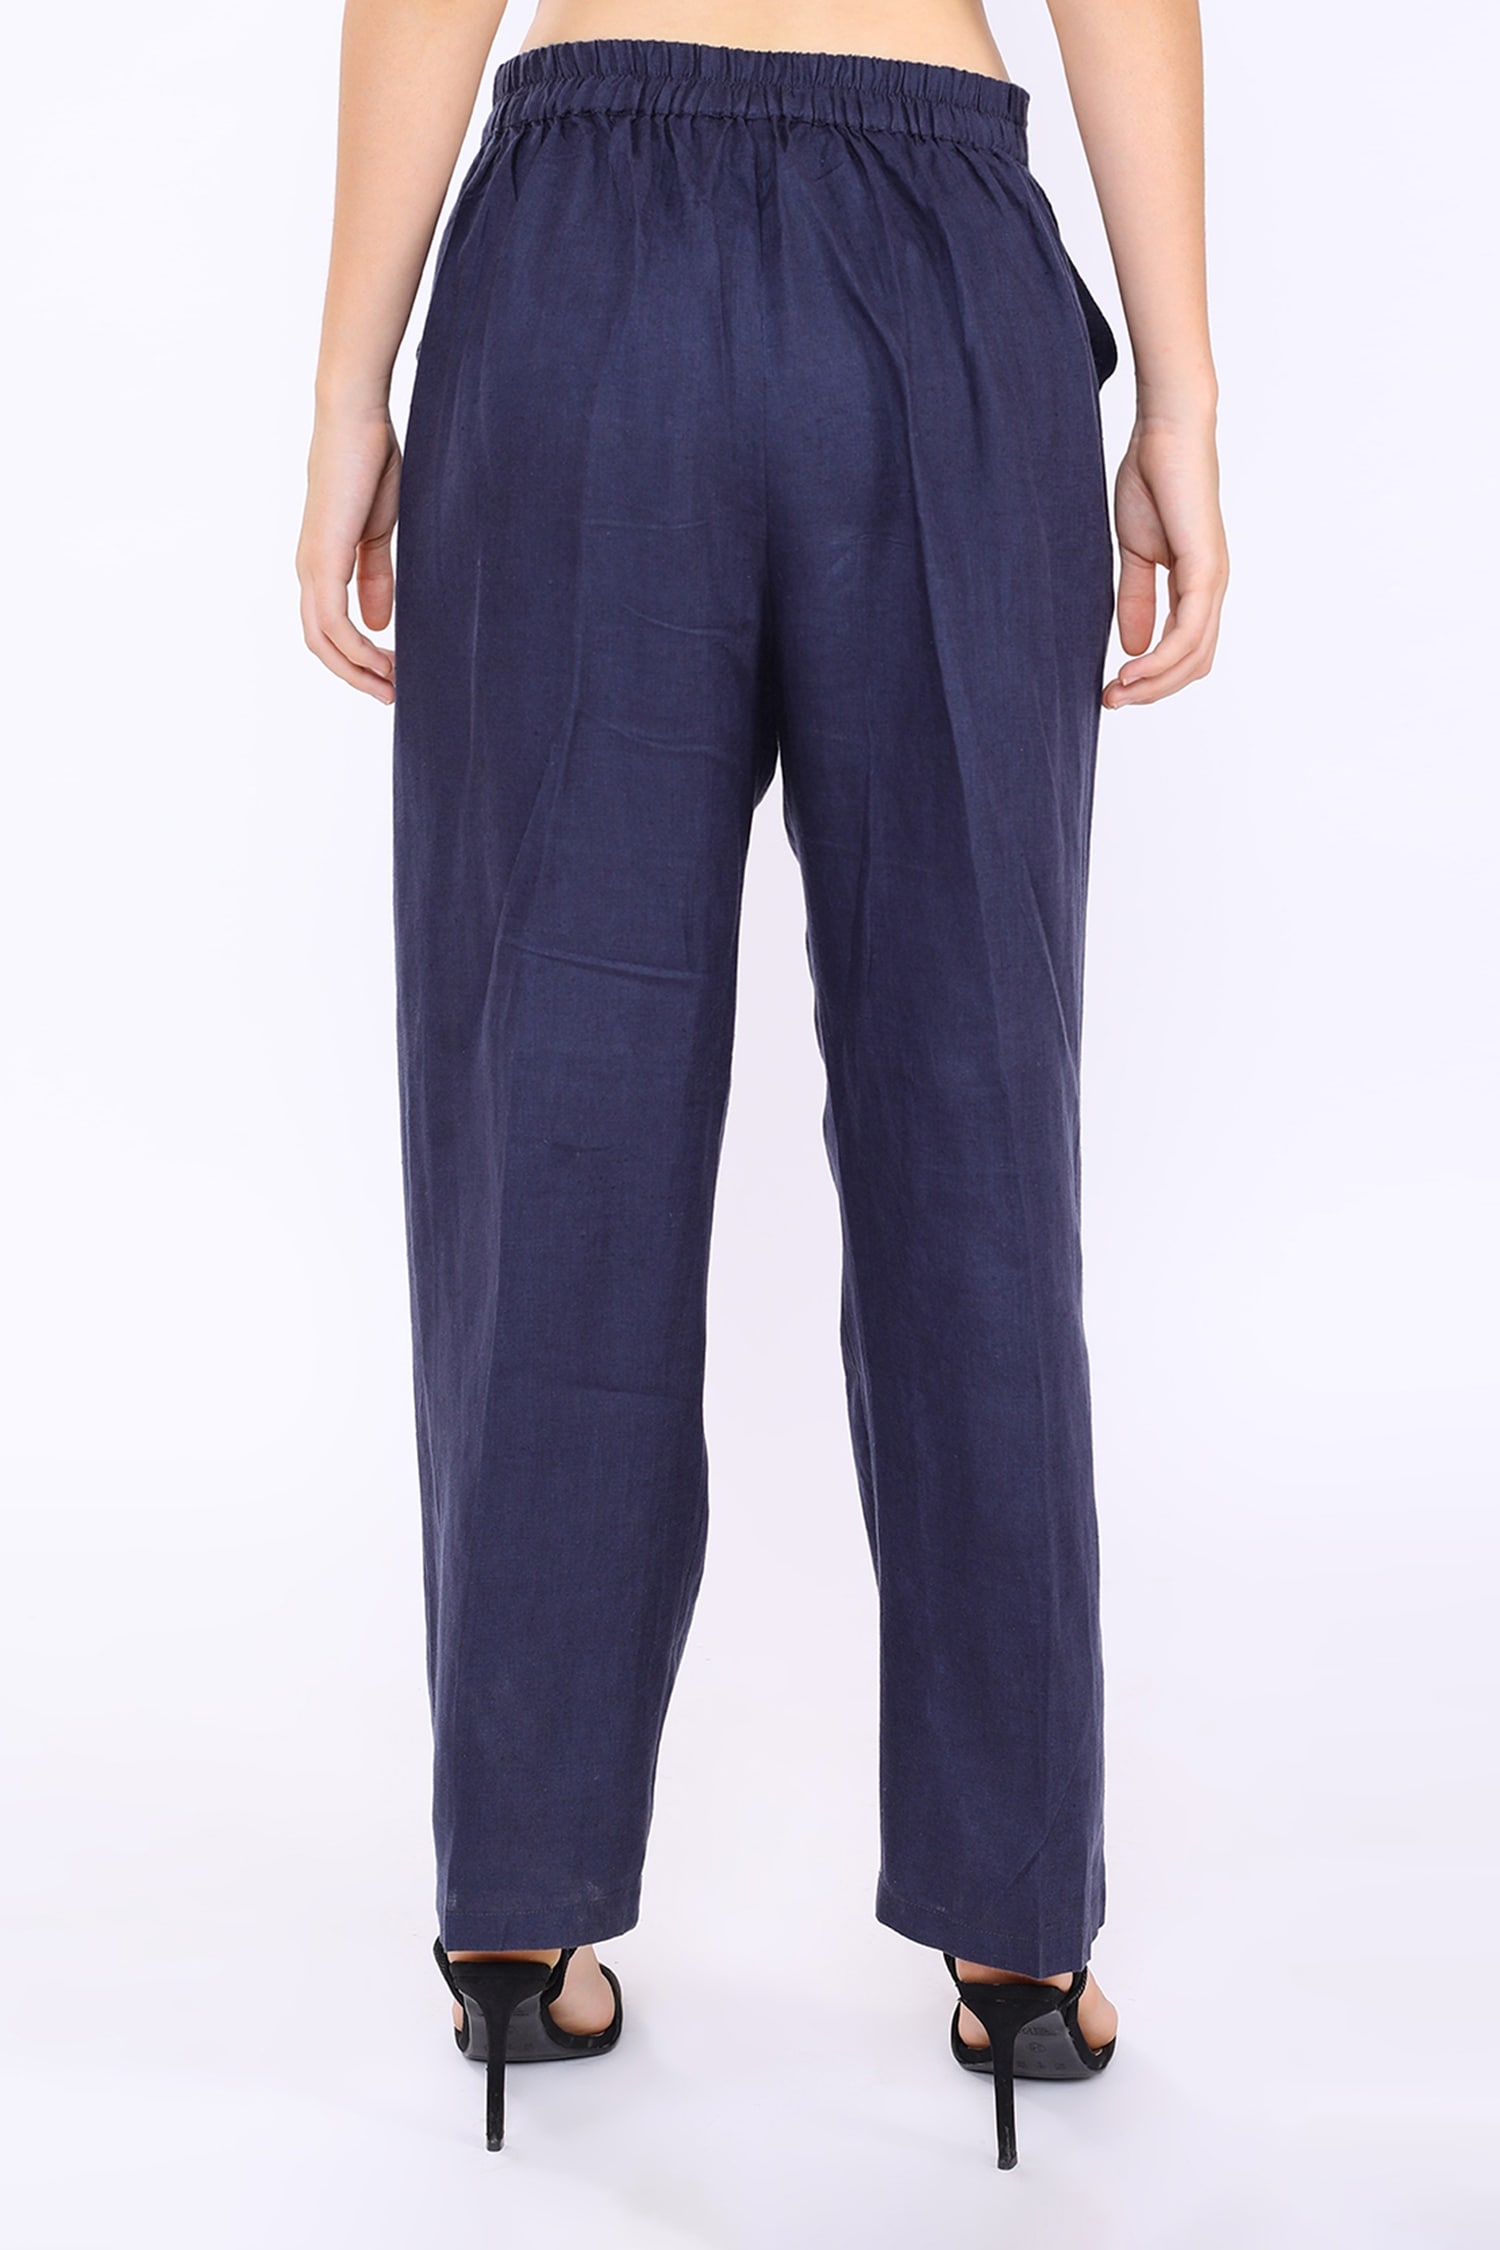 Buy Linen Bloom Blue Linen Pant Online | Aza Fashions